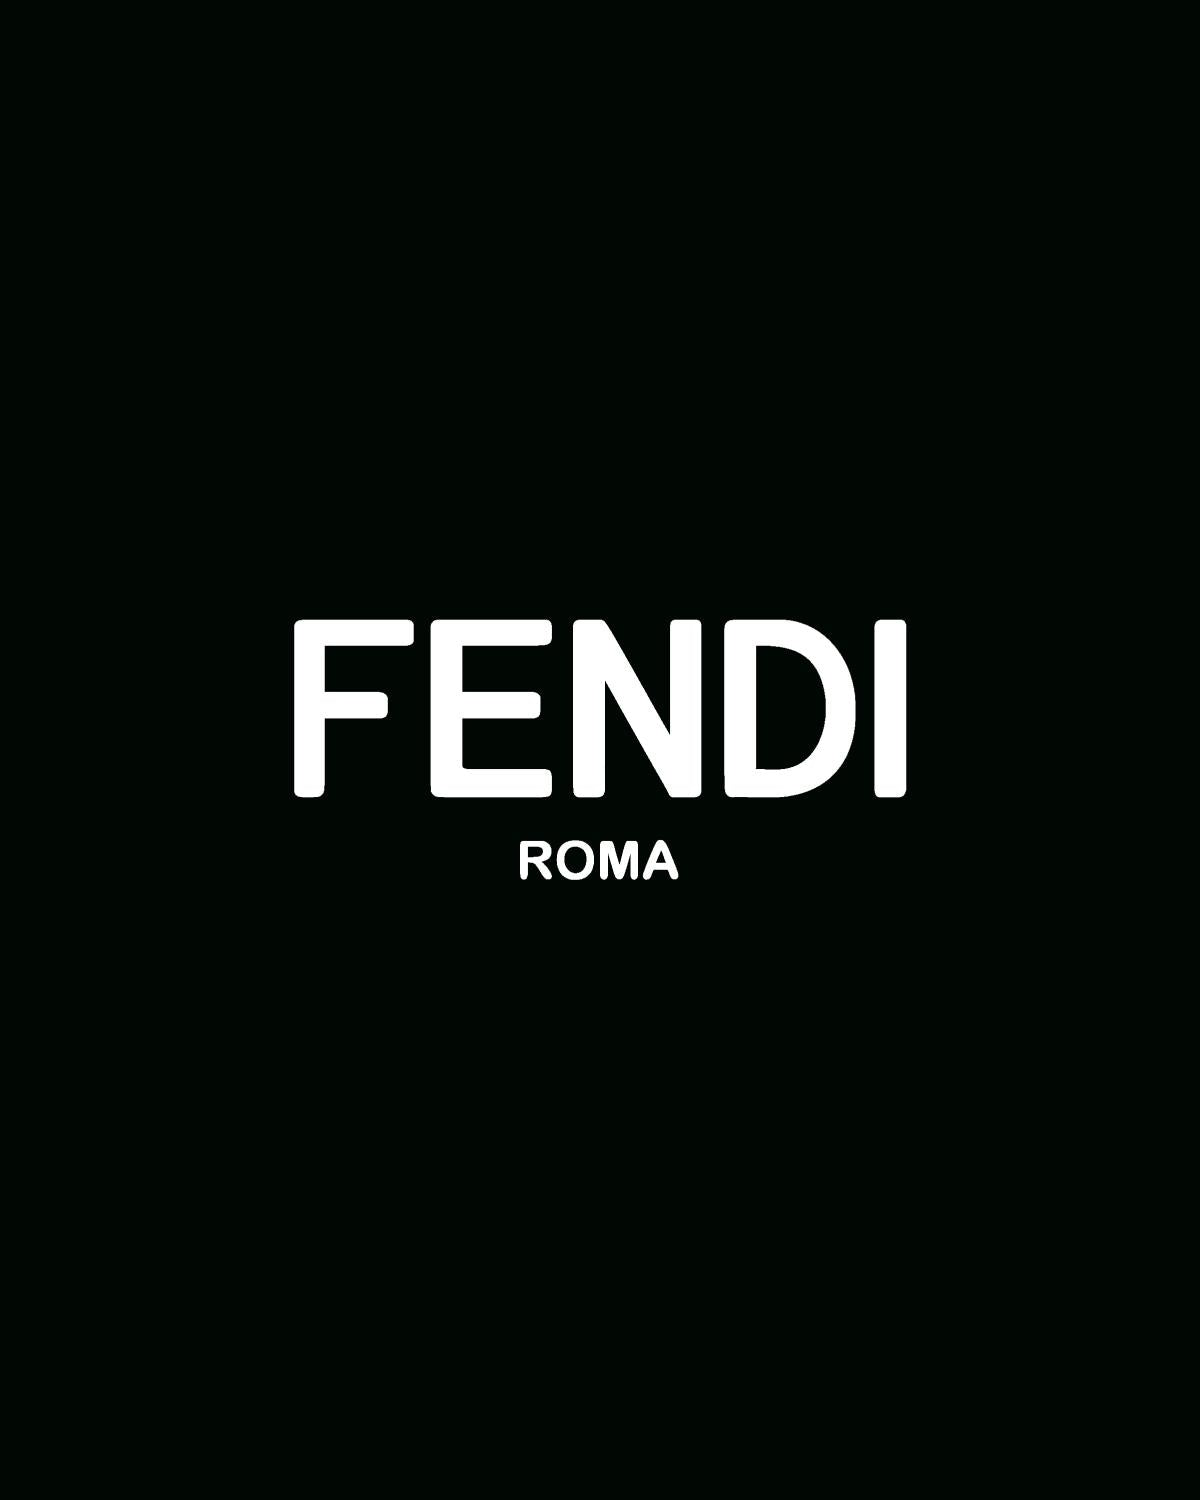 Black Logo-embossed padded down ski suit, Fendi